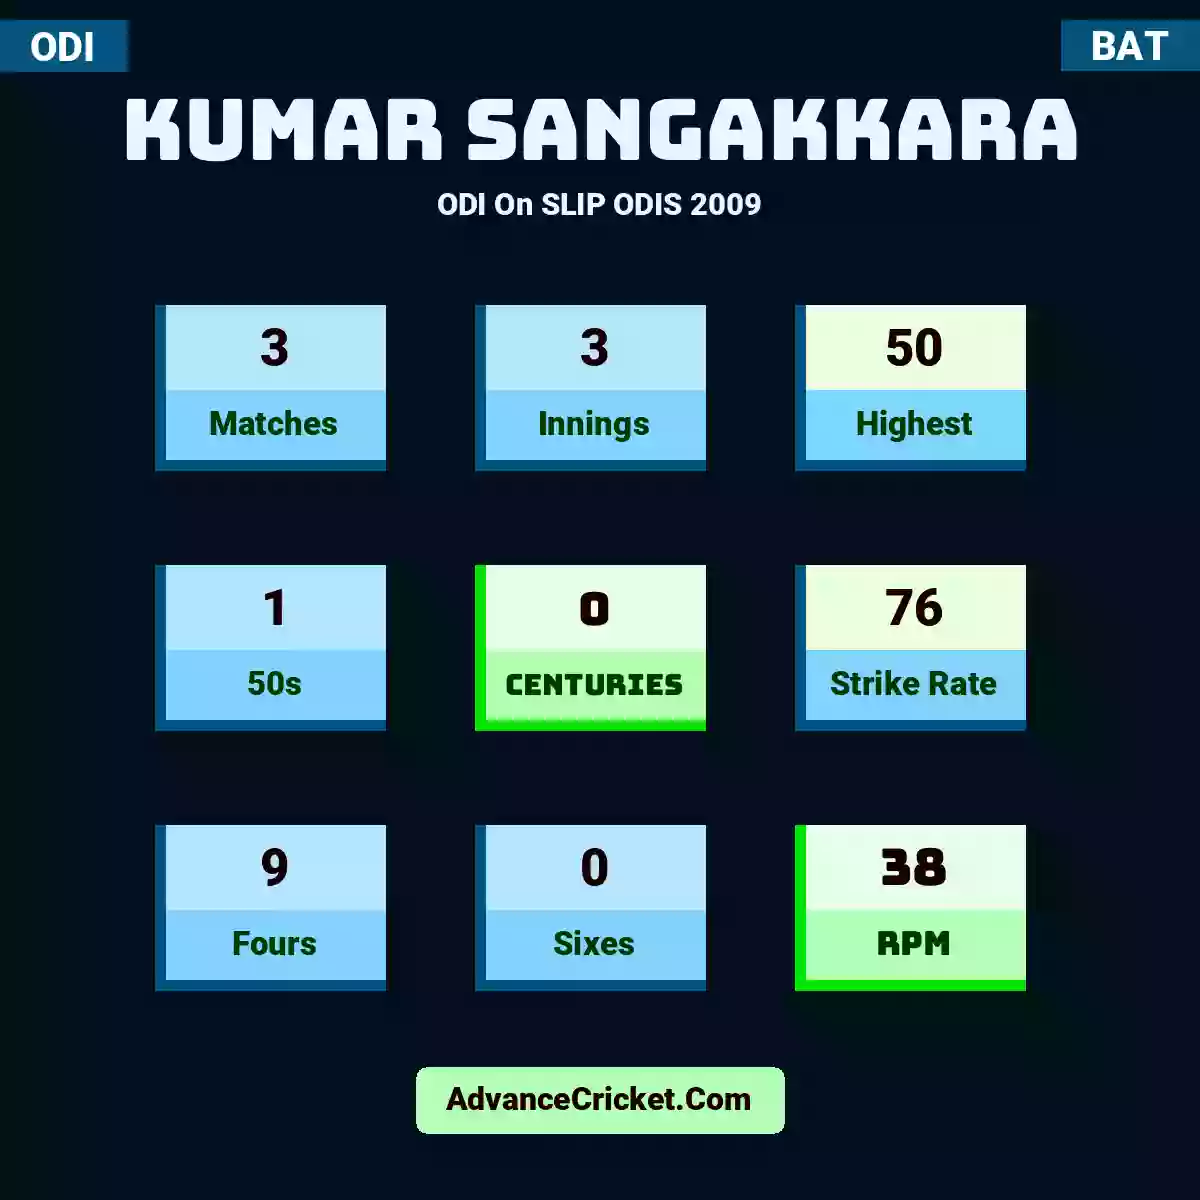 Kumar Sangakkara ODI  On SLIP ODIS 2009, Kumar Sangakkara played 3 matches, scored 50 runs as highest, 1 half-centuries, and 0 centuries, with a strike rate of 76. K.Sangakkara hit 9 fours and 0 sixes, with an RPM of 38.